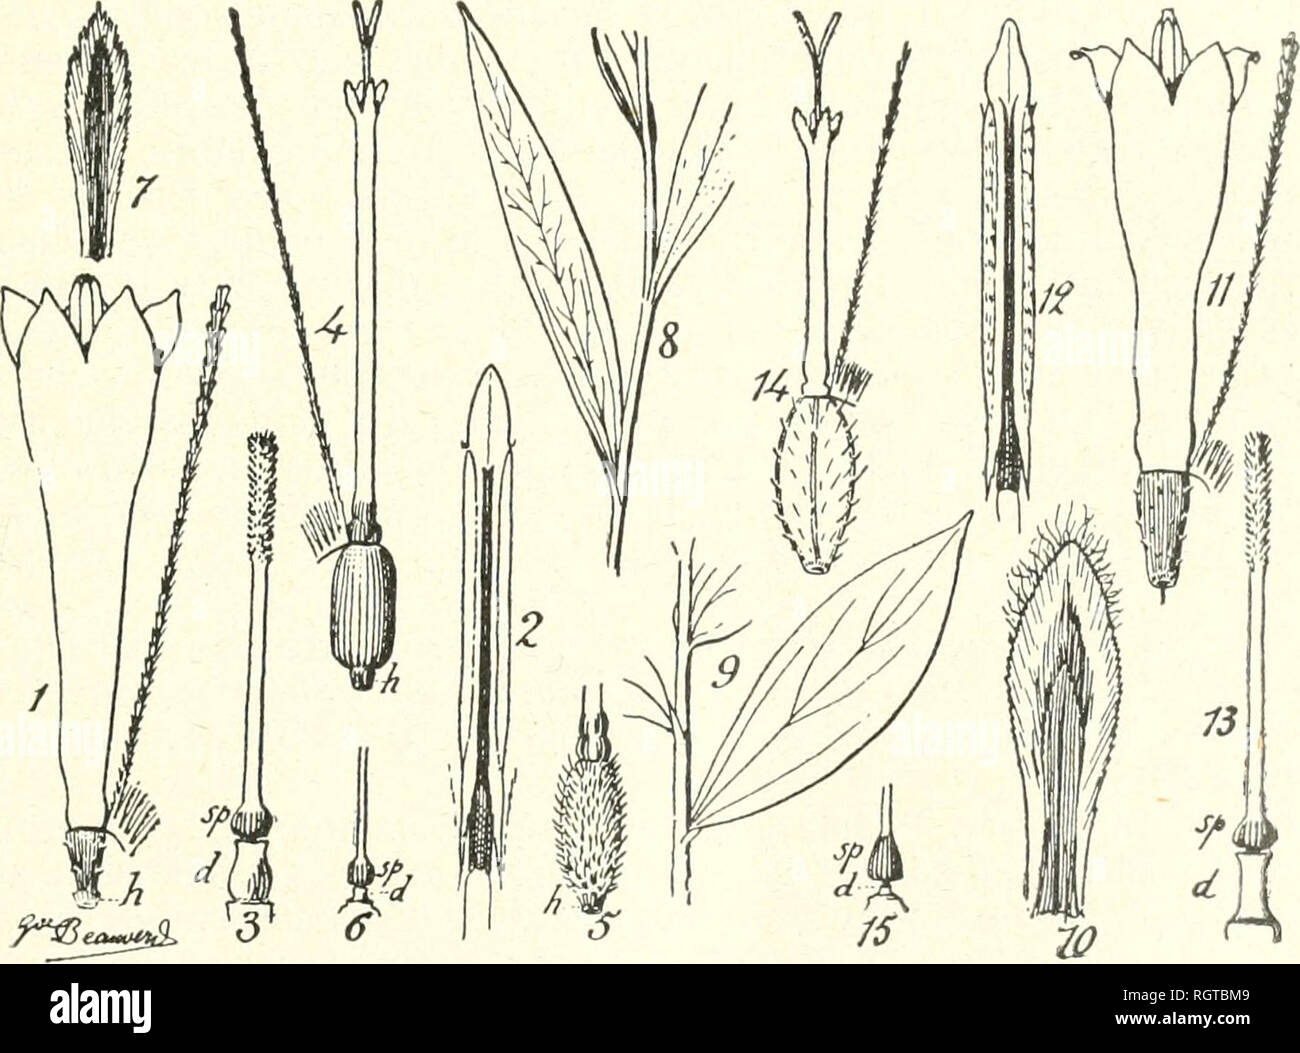 . Bulletin de la Socit botanique de Genve. Plants; Plants -- Switzerland. ^10) (;. BEAUVERD. GONTRIHUTIONS A L'kTUDE DES COMPOSÃES 21 Hei'ba hoterogama, infenie fniticulosa, hasi sloloiiilera (stMiipcr?). Caulis gracilis valde elongatus (:30-()0 (-m.) Â± IT) l'olia cauliiia geivns (iiileniodia +:? ciii. longa). Folia (siipcrricie + SOX-^-'Â» niin.) hnsilariu siib aiiUiesi destriicta ; /'. raiilhia liasi apiciMiue aciilf atltMiuata, + longe mucroiiata. Capitula iiiediocria (Â± 5 iiiiii. diaiii.) pcrfecte heterogaina, 5-10 in cyinam ad apiceiii 3-5 ramulis + midis lae corvinbilVra. Corollae in  Stock Photo